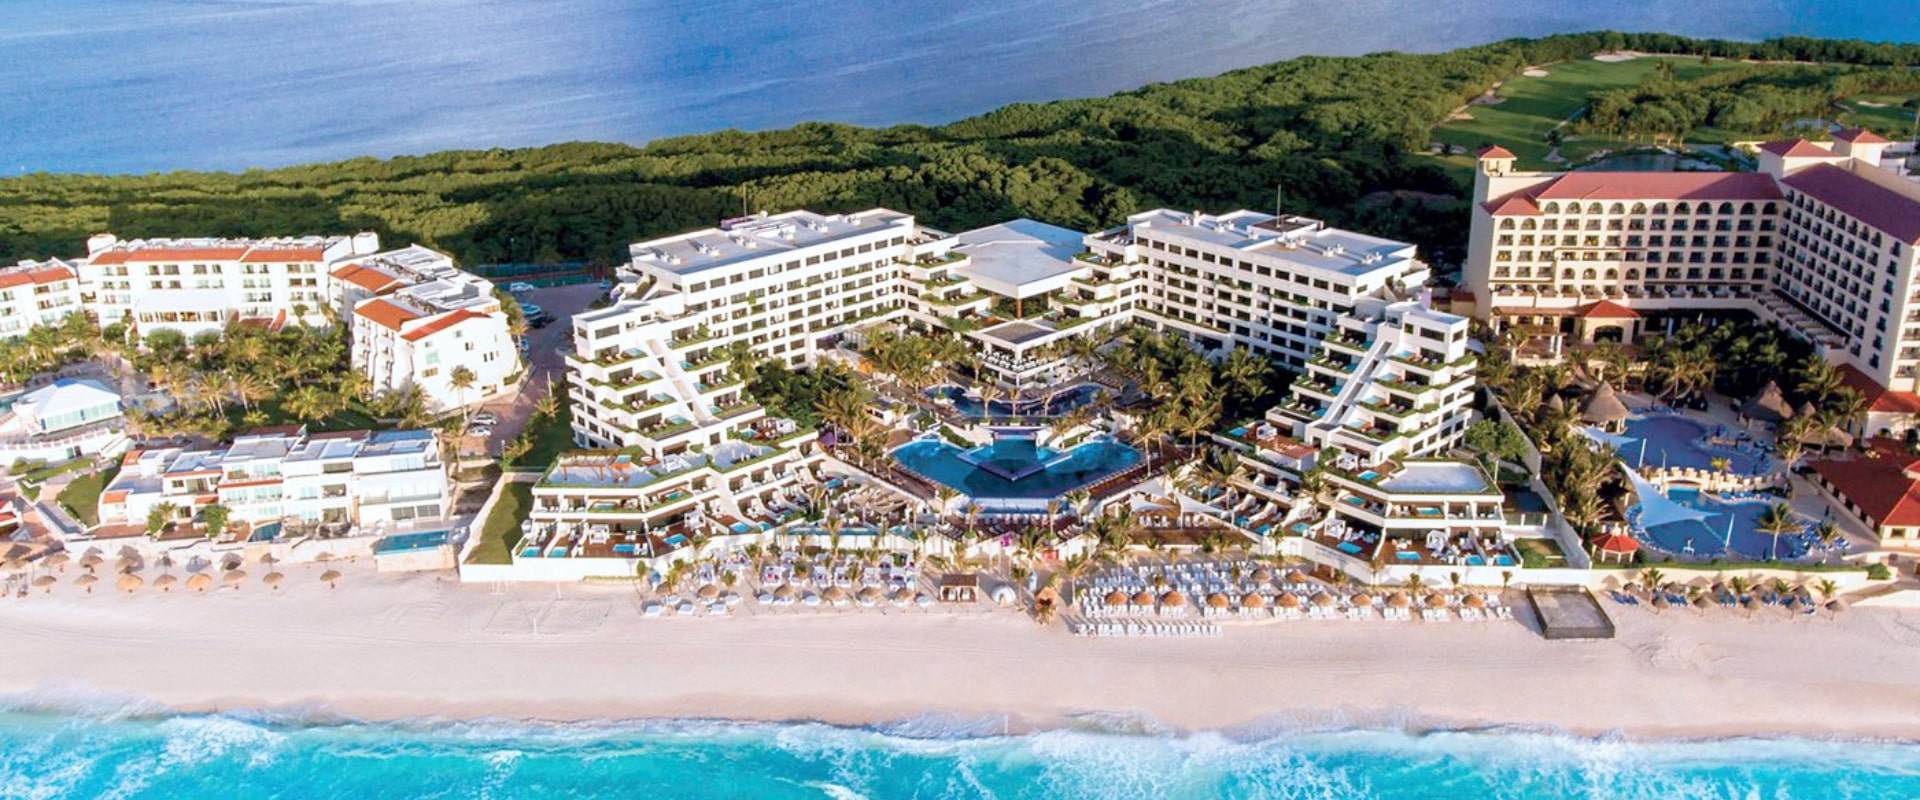 Hotel 1 Cancun Nautilos Travel-min